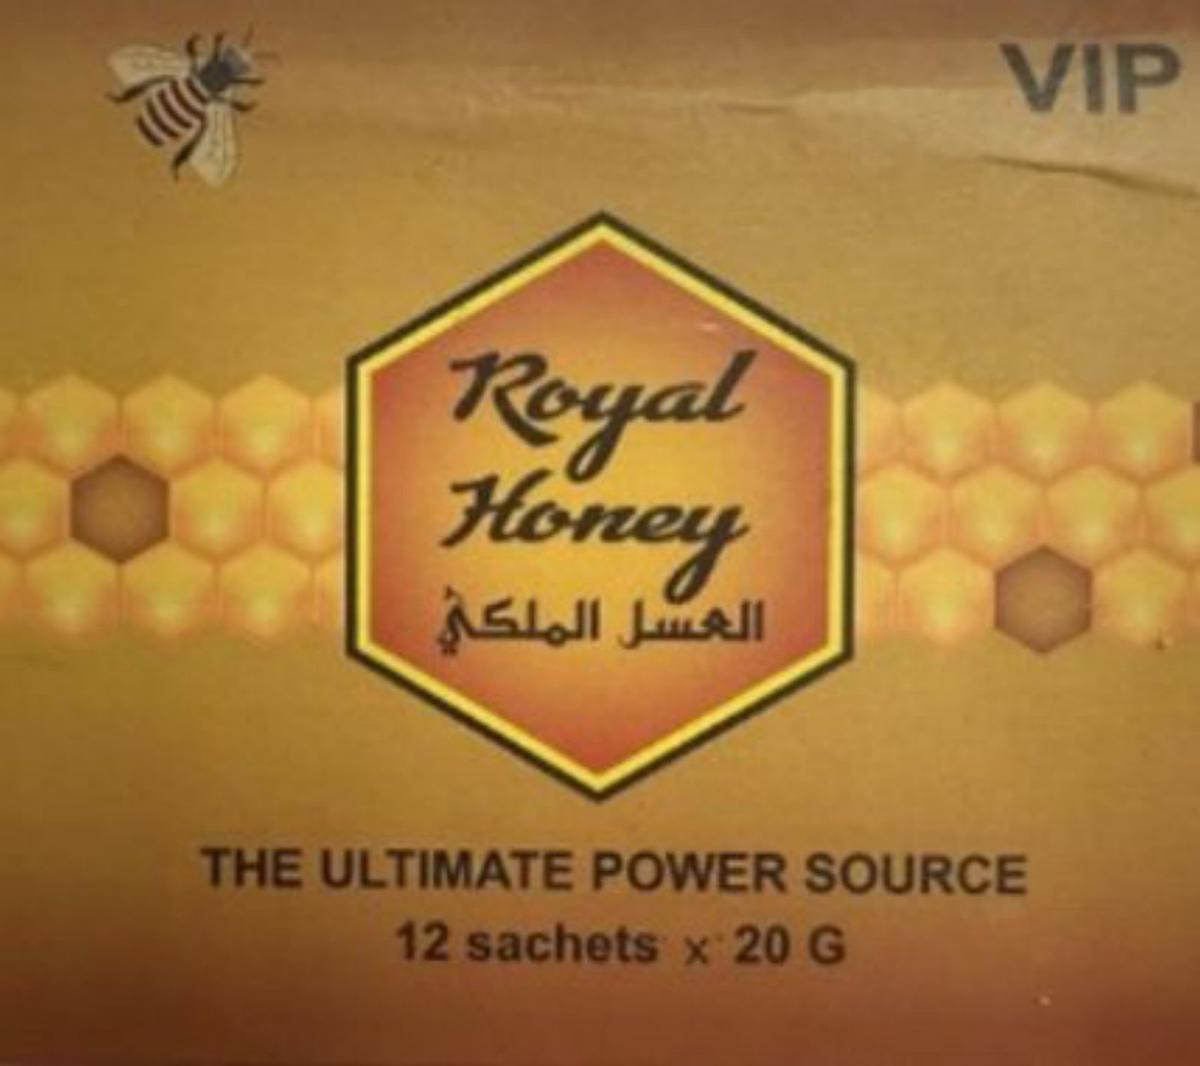 Royal Honey Plus. Se venden como productos naturales, pero un análisis ha demostrado que son un fraude.